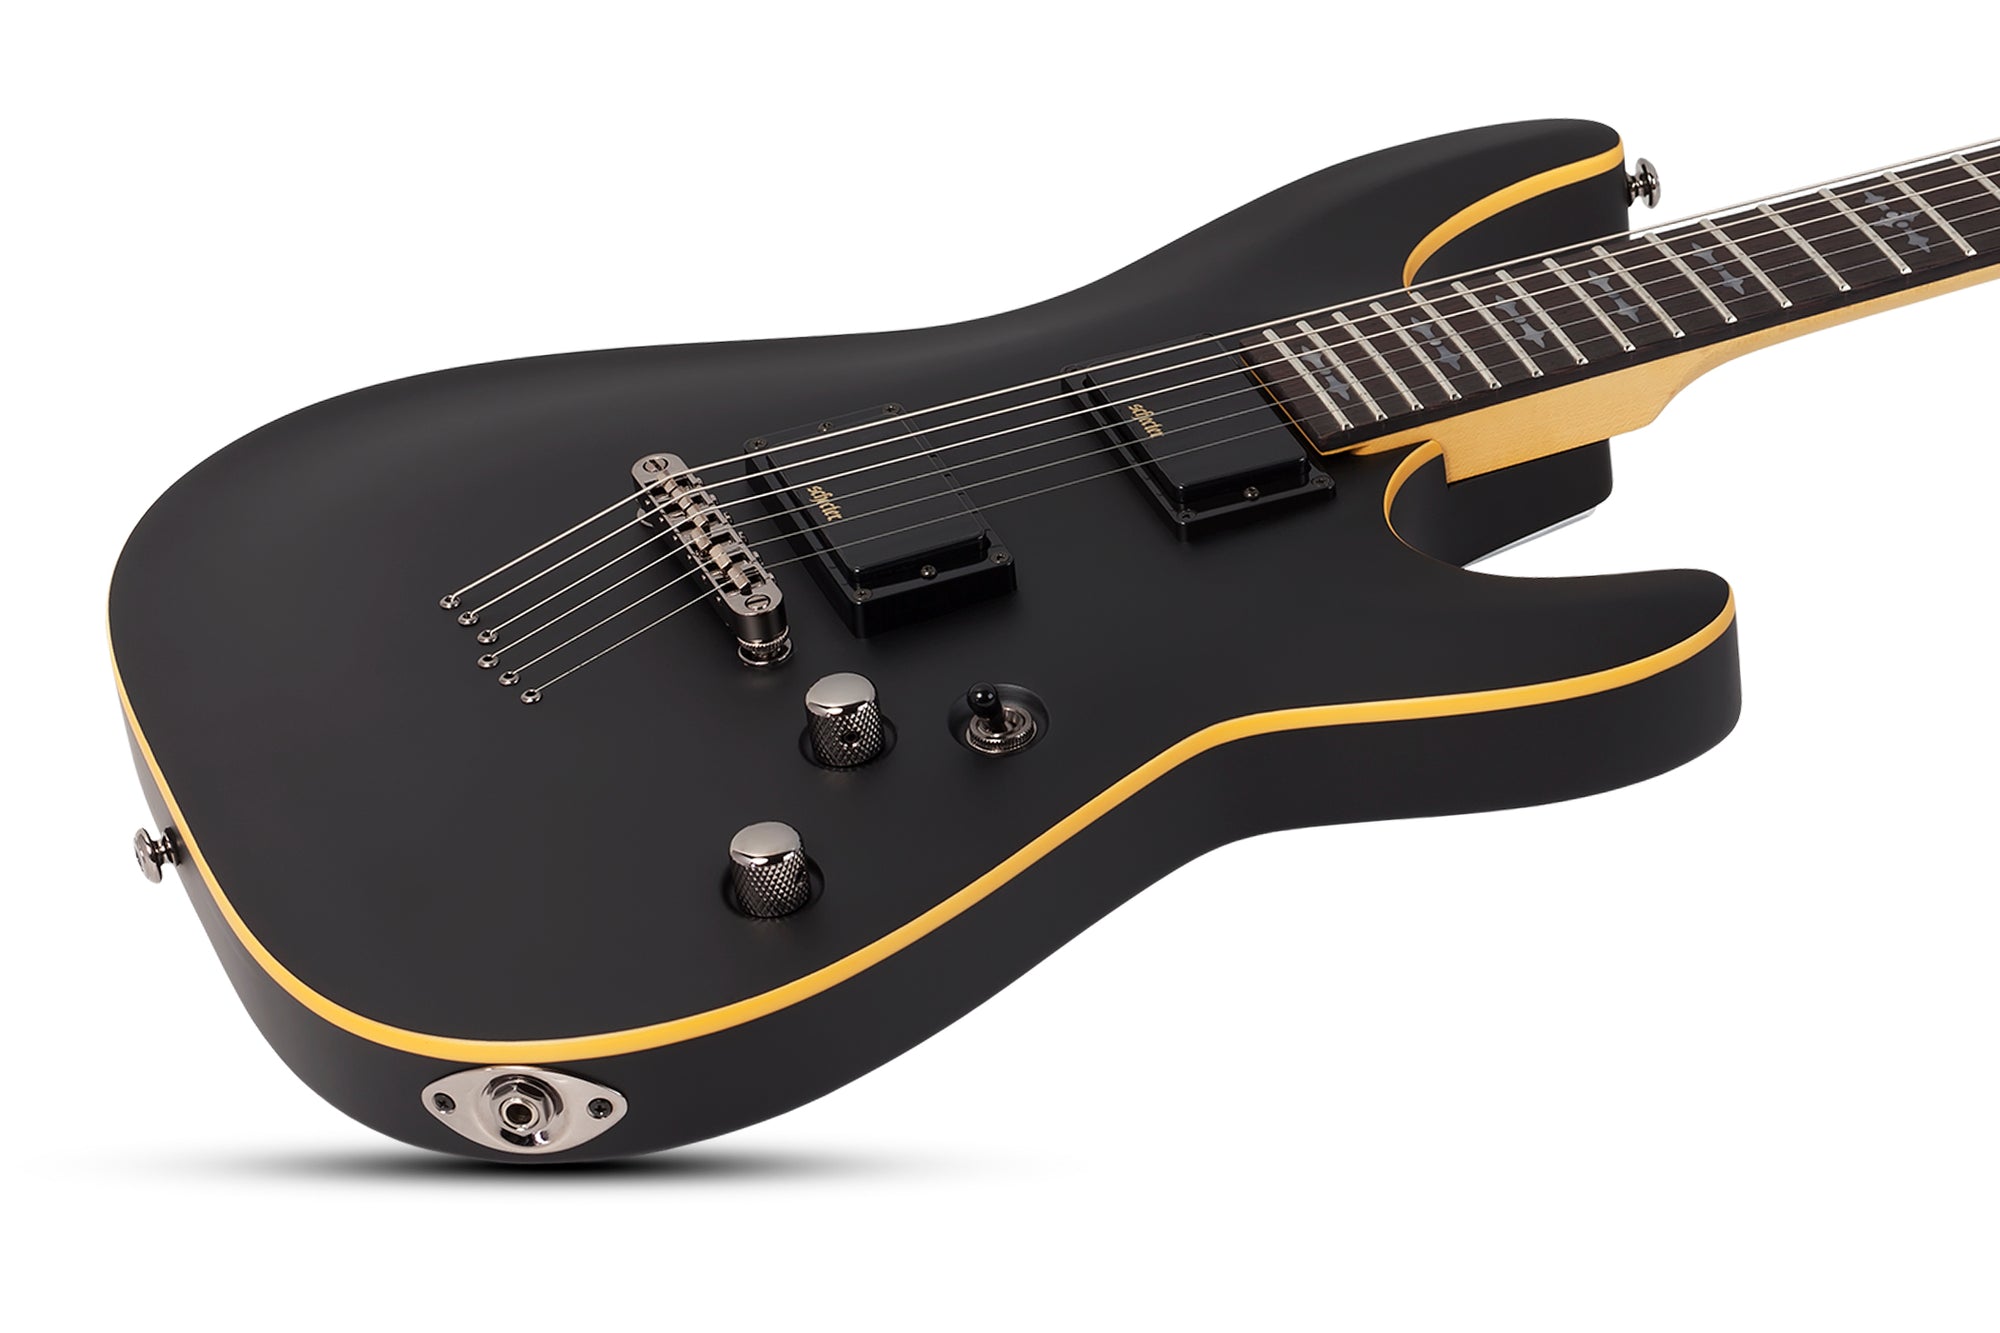 Schecter Demon-6 String Electric Guitar - Aged Black Satin 3660-SHC - The Guitar World